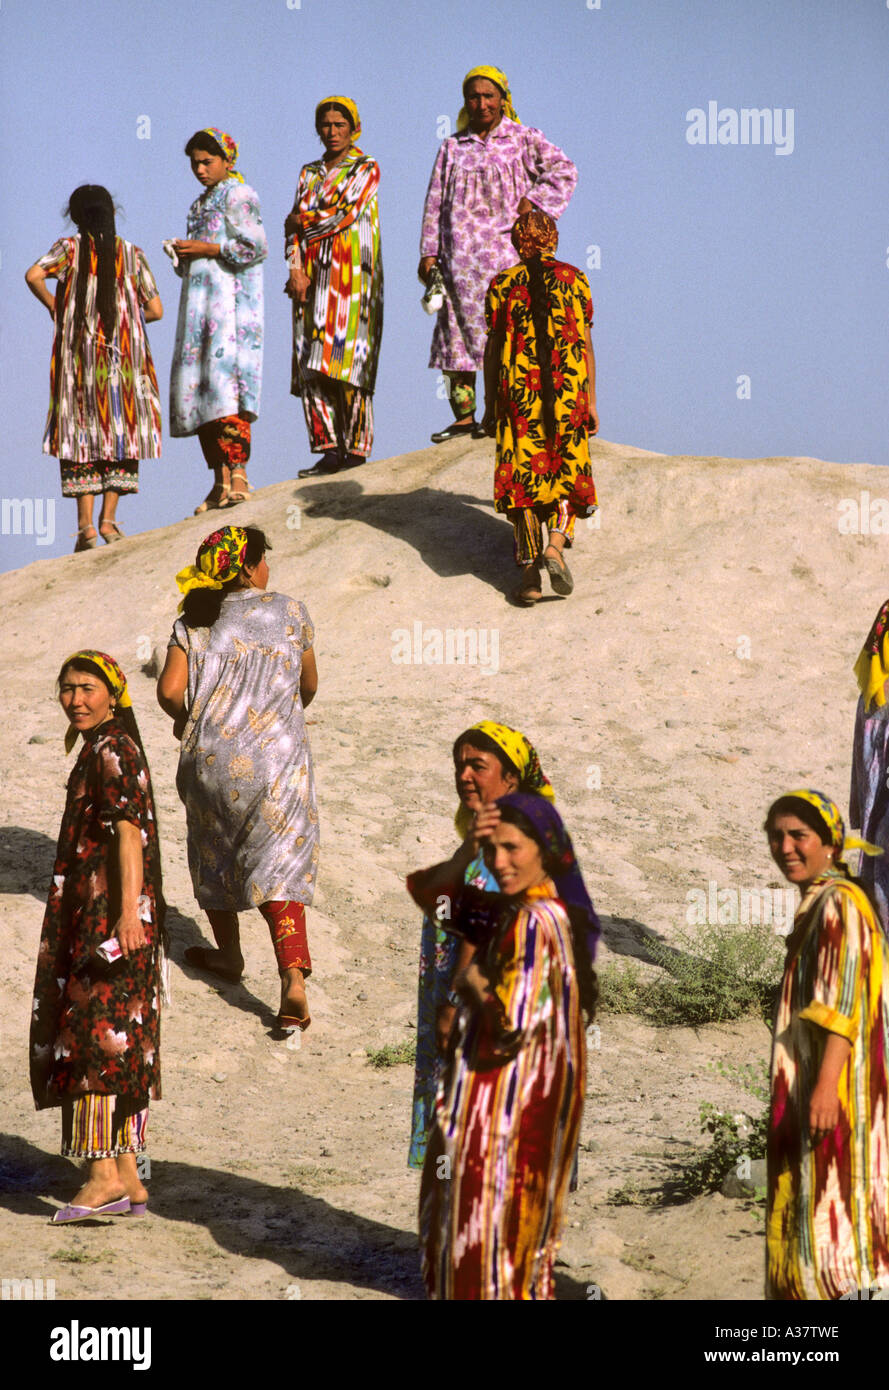 Tadjikistan women at the Hissar fortress Dushambe Stock Photo